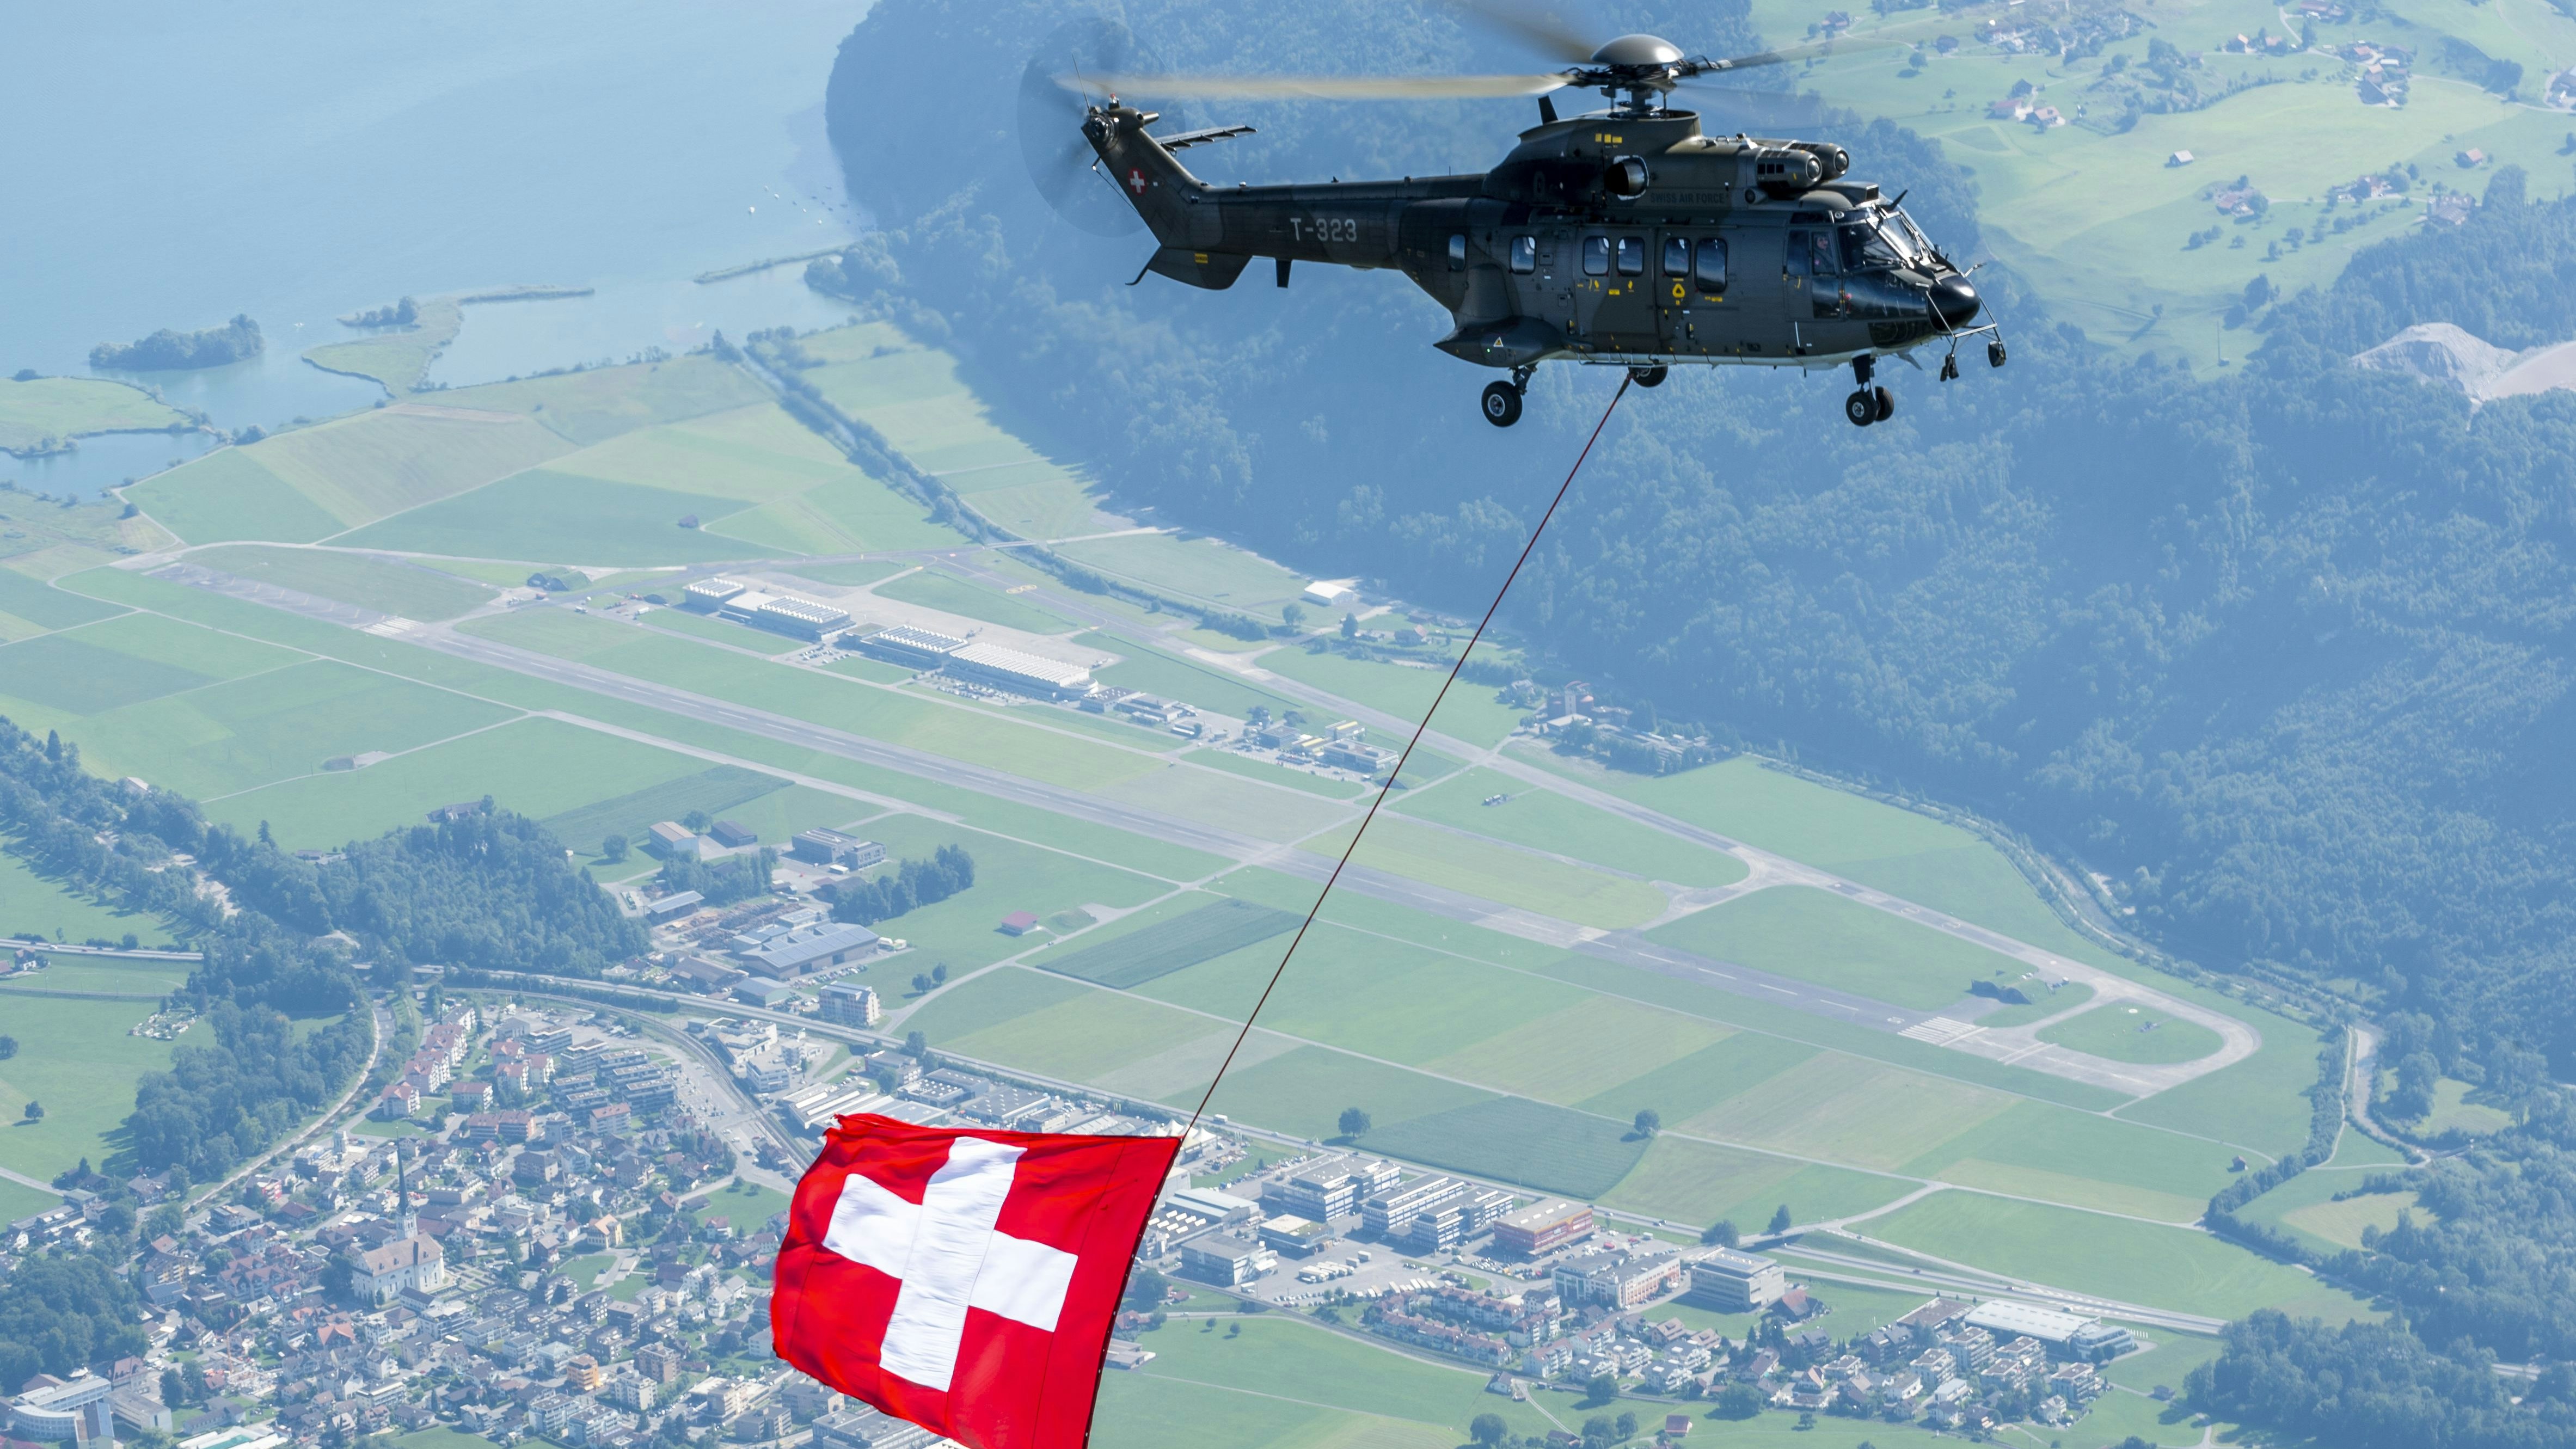 Super Puma T-323, Schweiz, Fahne, Alpnachersee